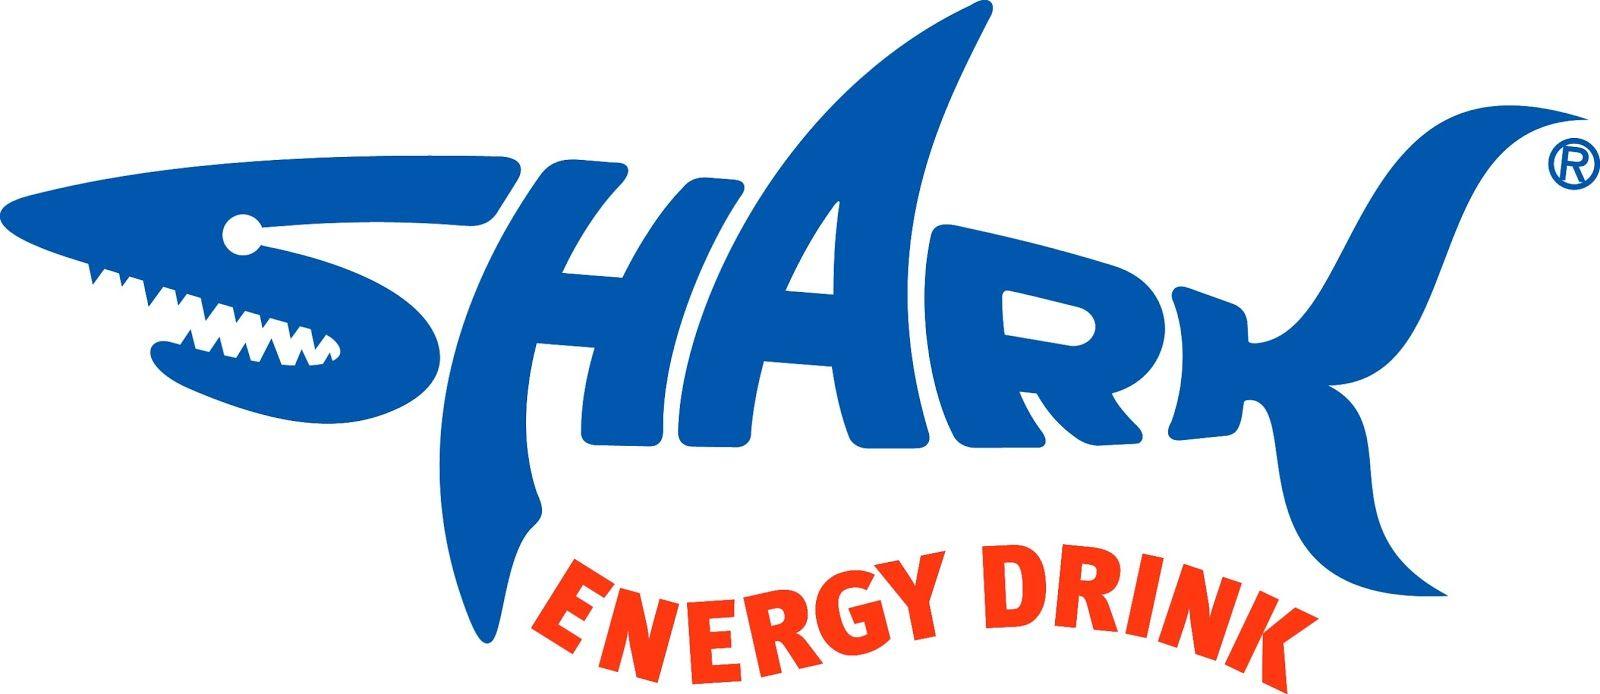 Energy Drink Logo - Shark Energy Drink logo use of letters [1600 x 694]